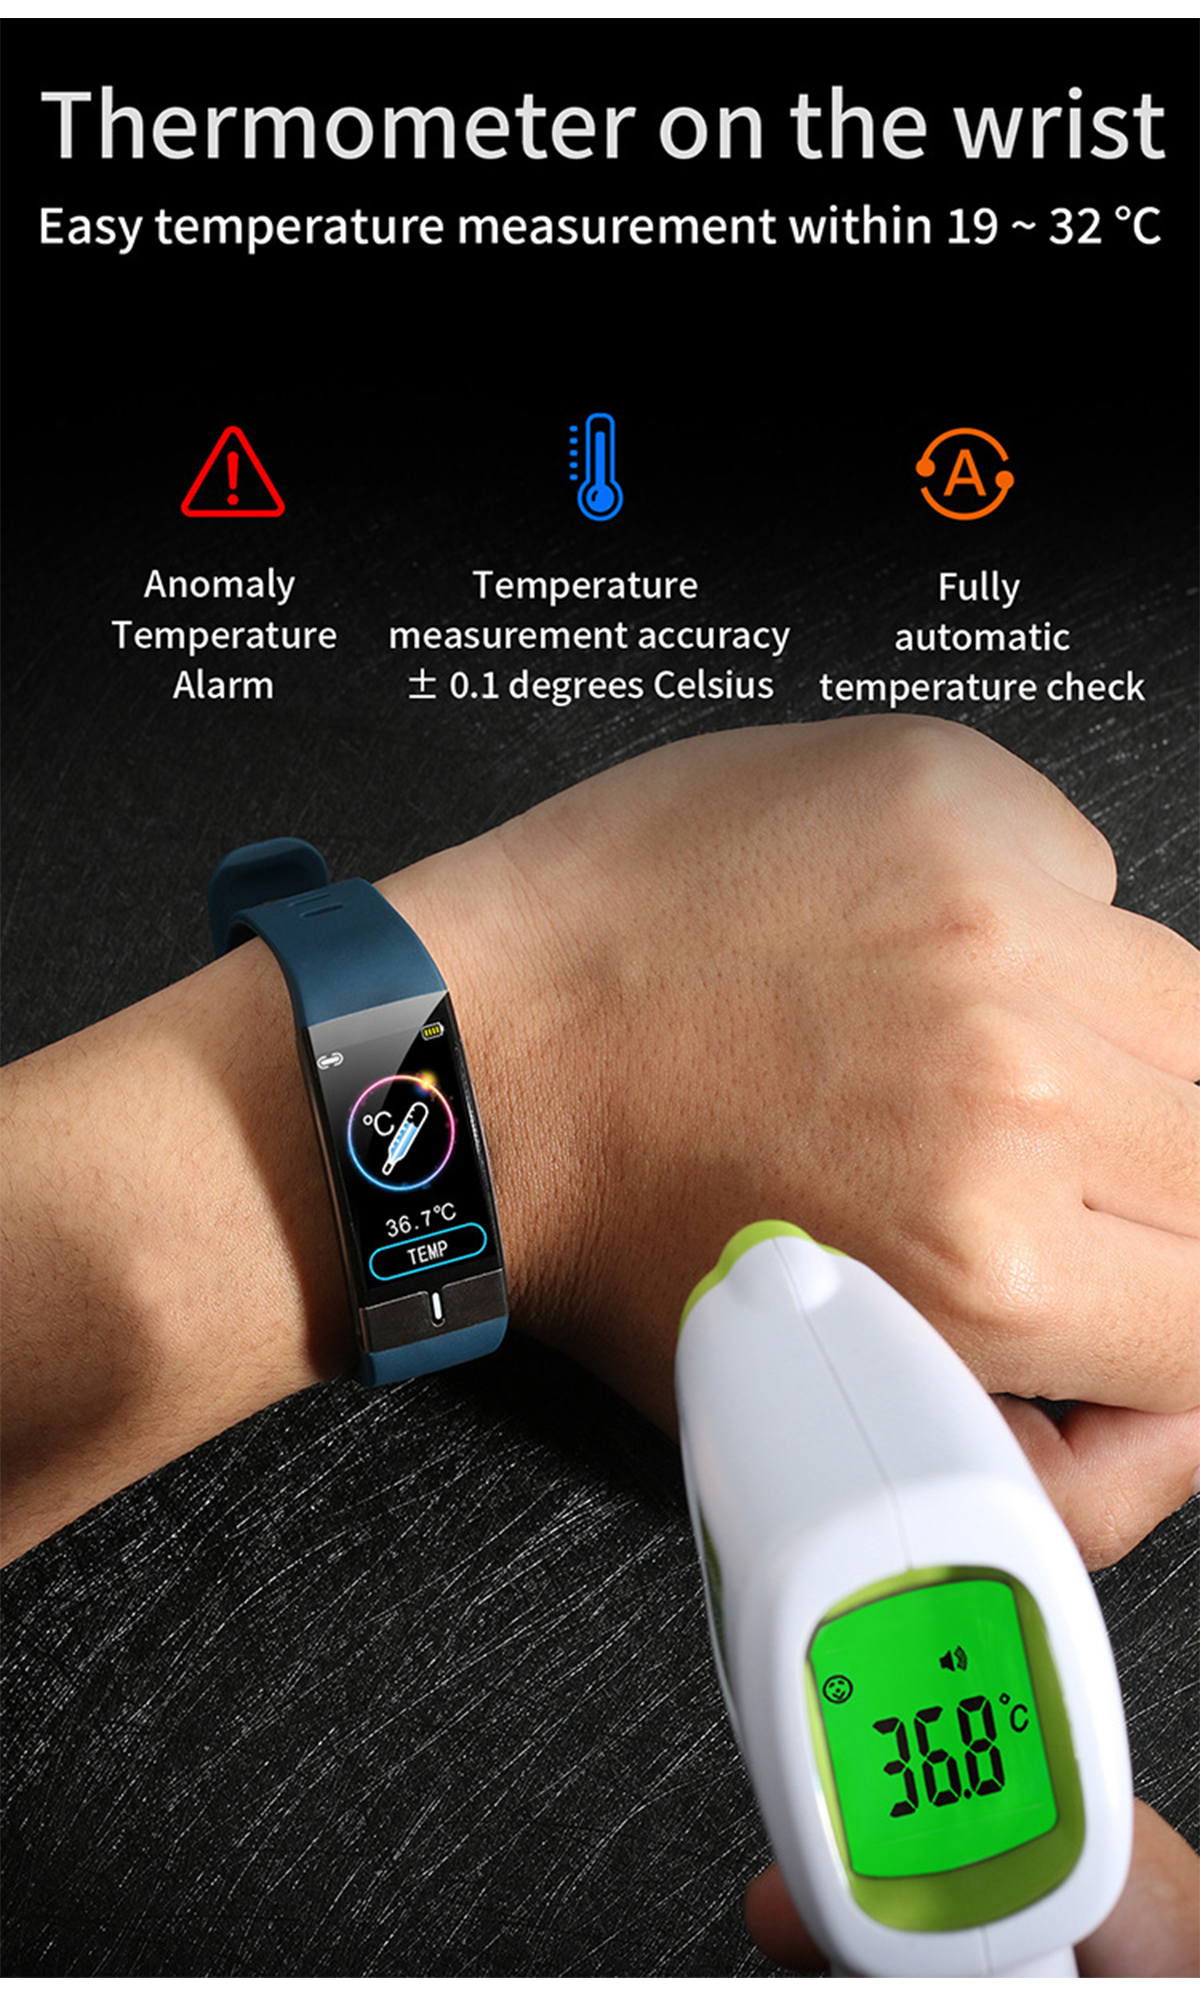 Smartwatch Blau BRIGHTAKE Silikon, E66-Uhren